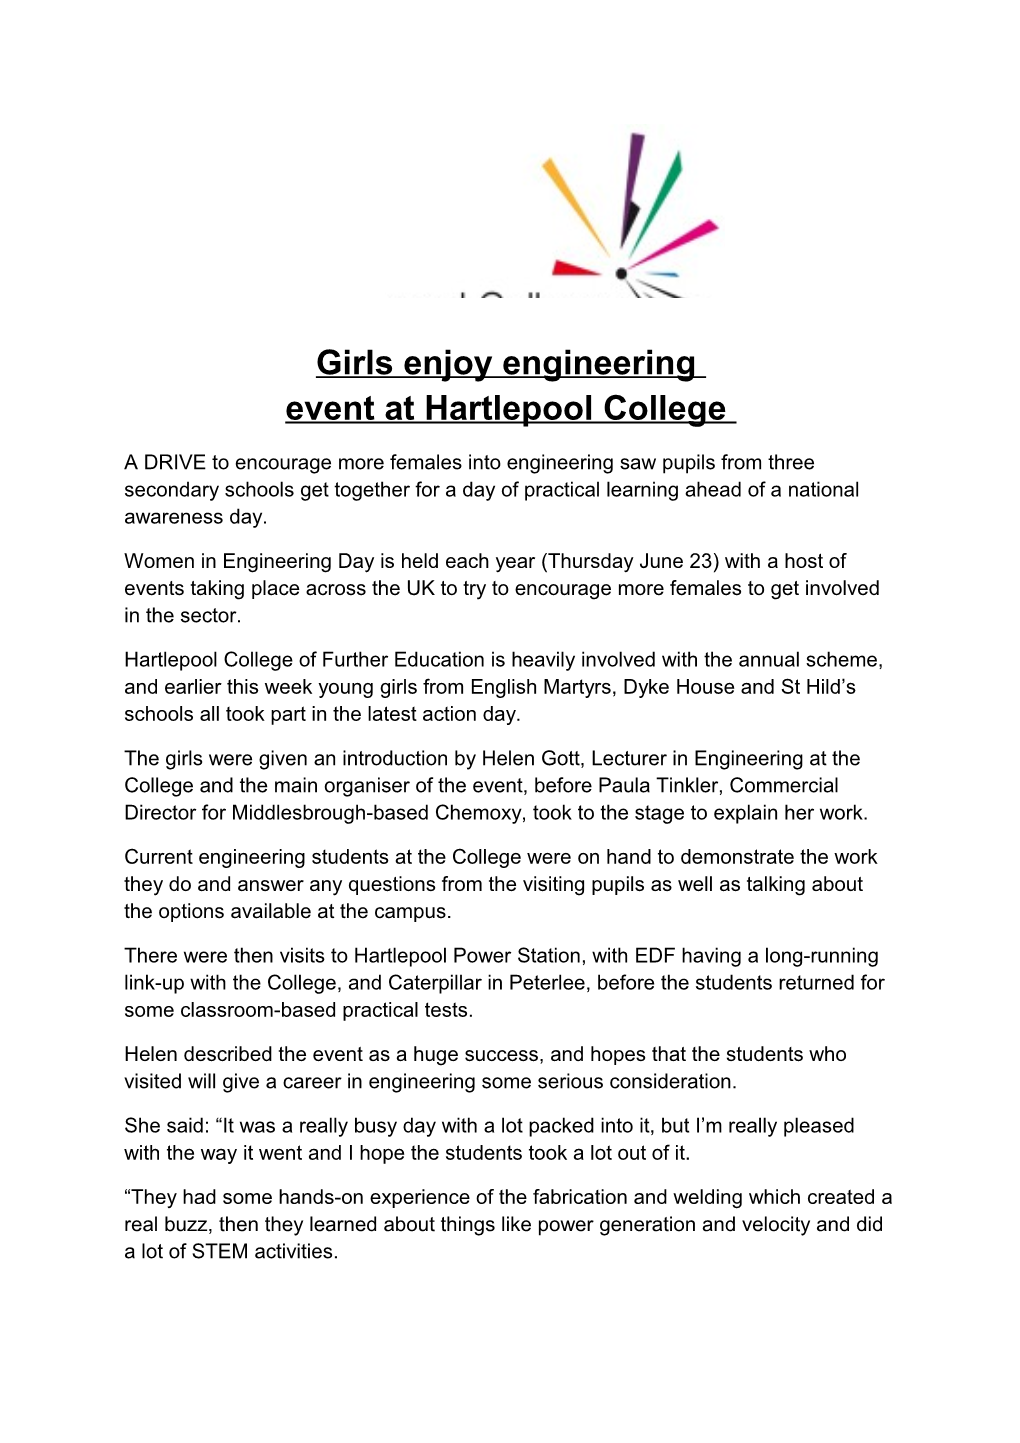 Girls Enjoy Engineering Event at Hartlepool College